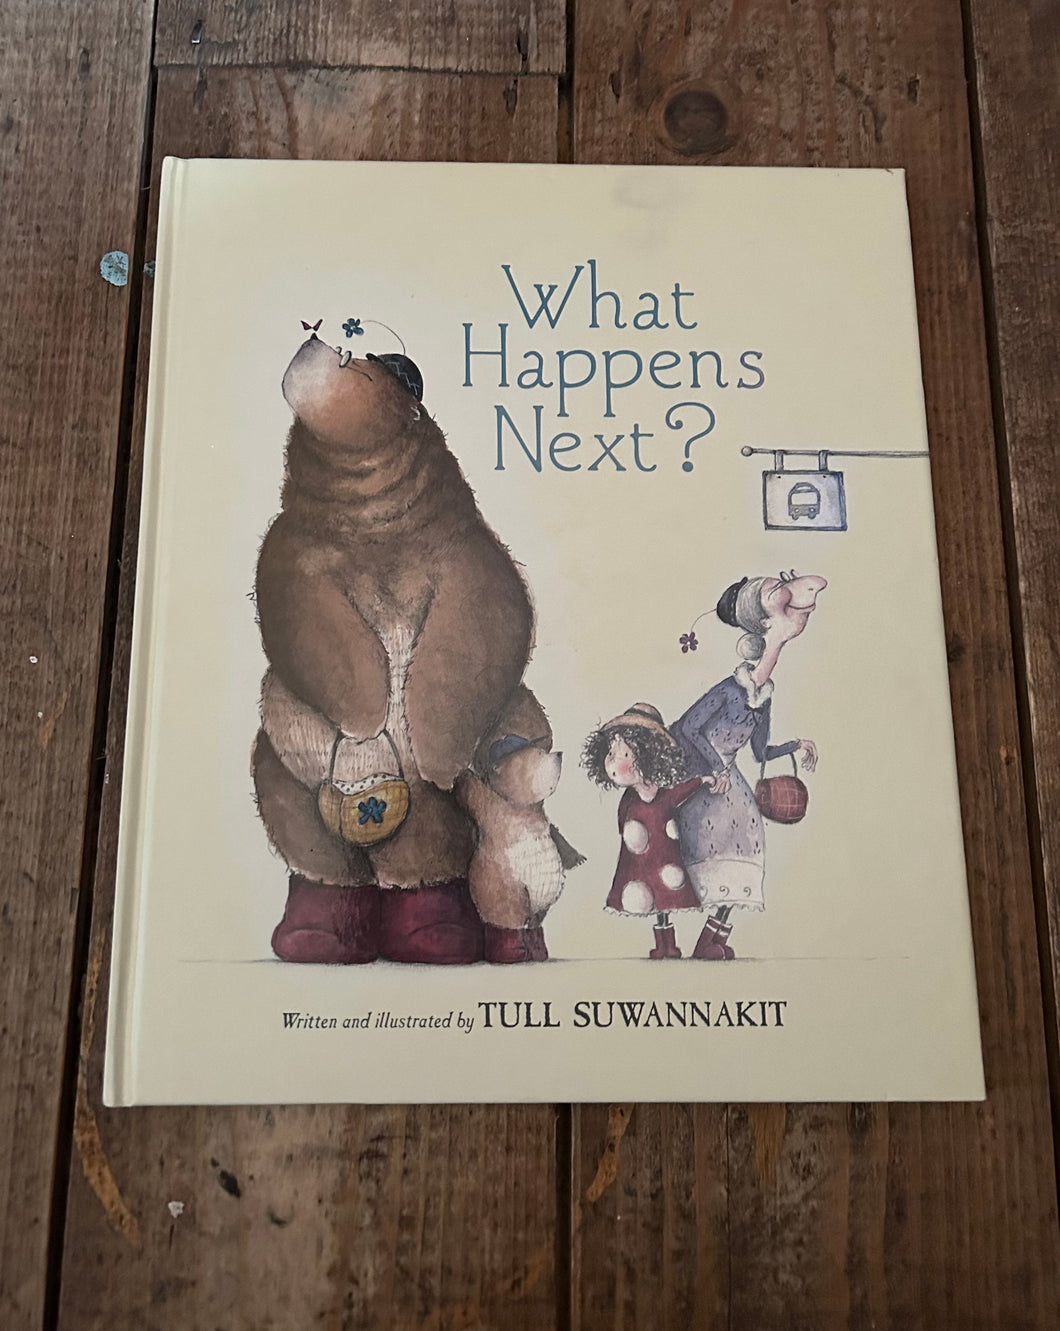 What happens next? by Tull Suwannakit